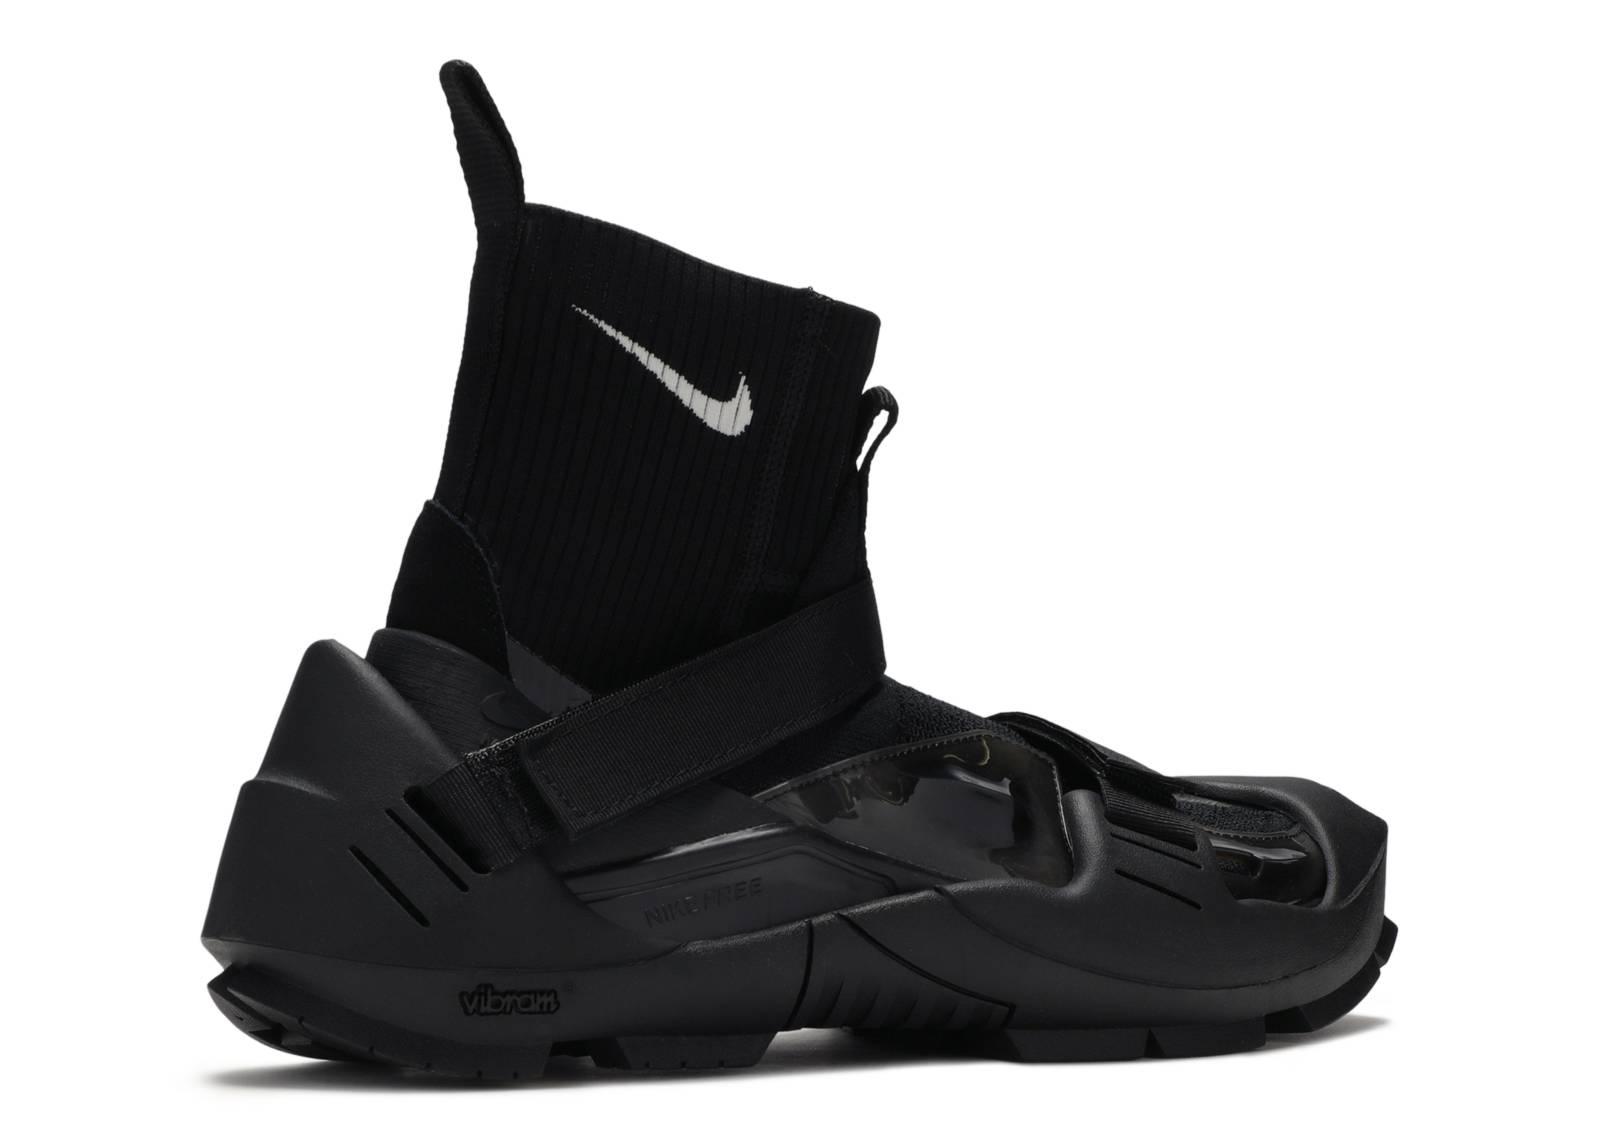 Nike X Mmw Free Tr Flyknit 3 Training Shoe in Black/ White/ University ...